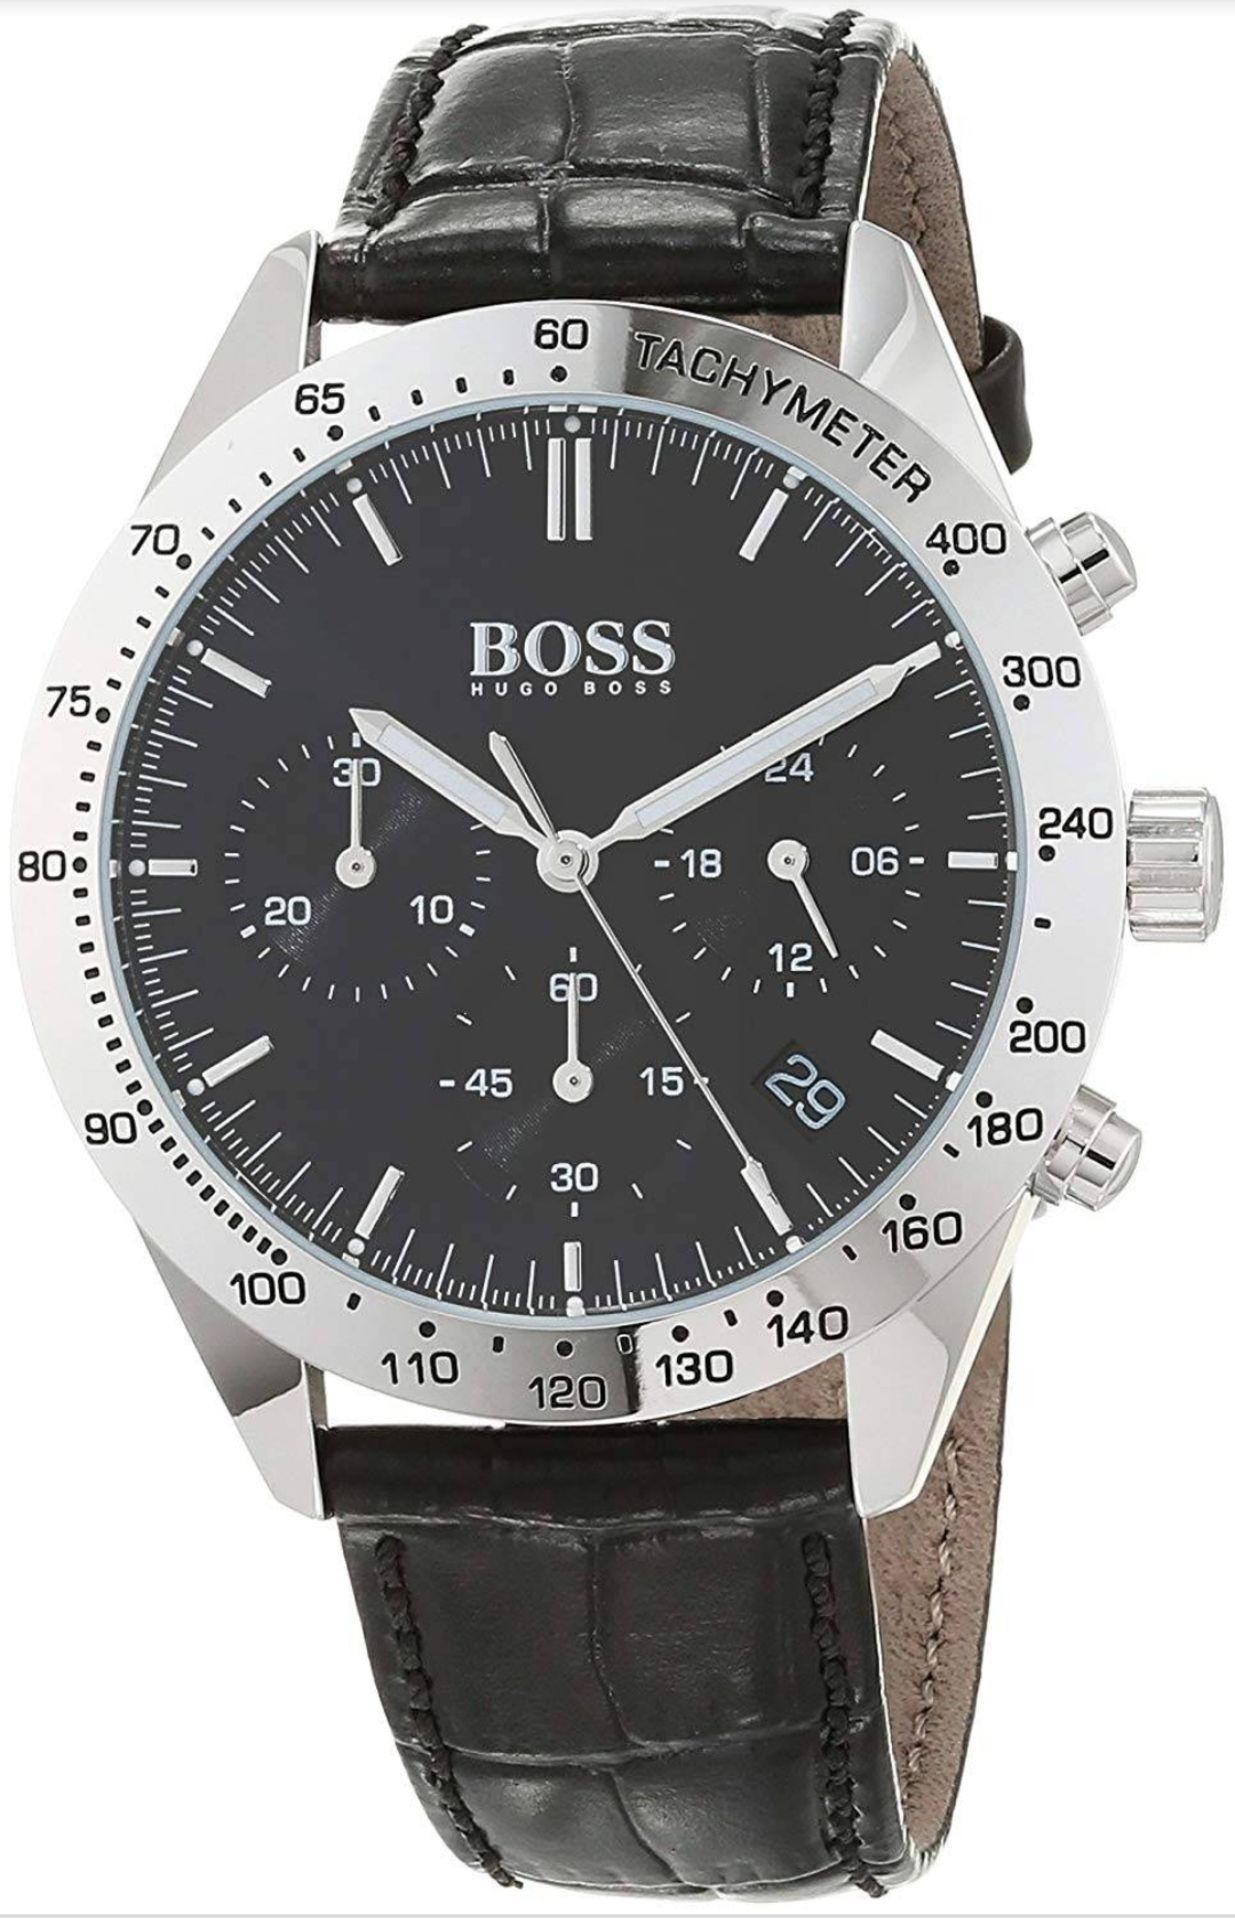 Hugo Boss 1513579 Men's Talent Black Leather Strap Quartz Chronograph Watch - Image 4 of 5